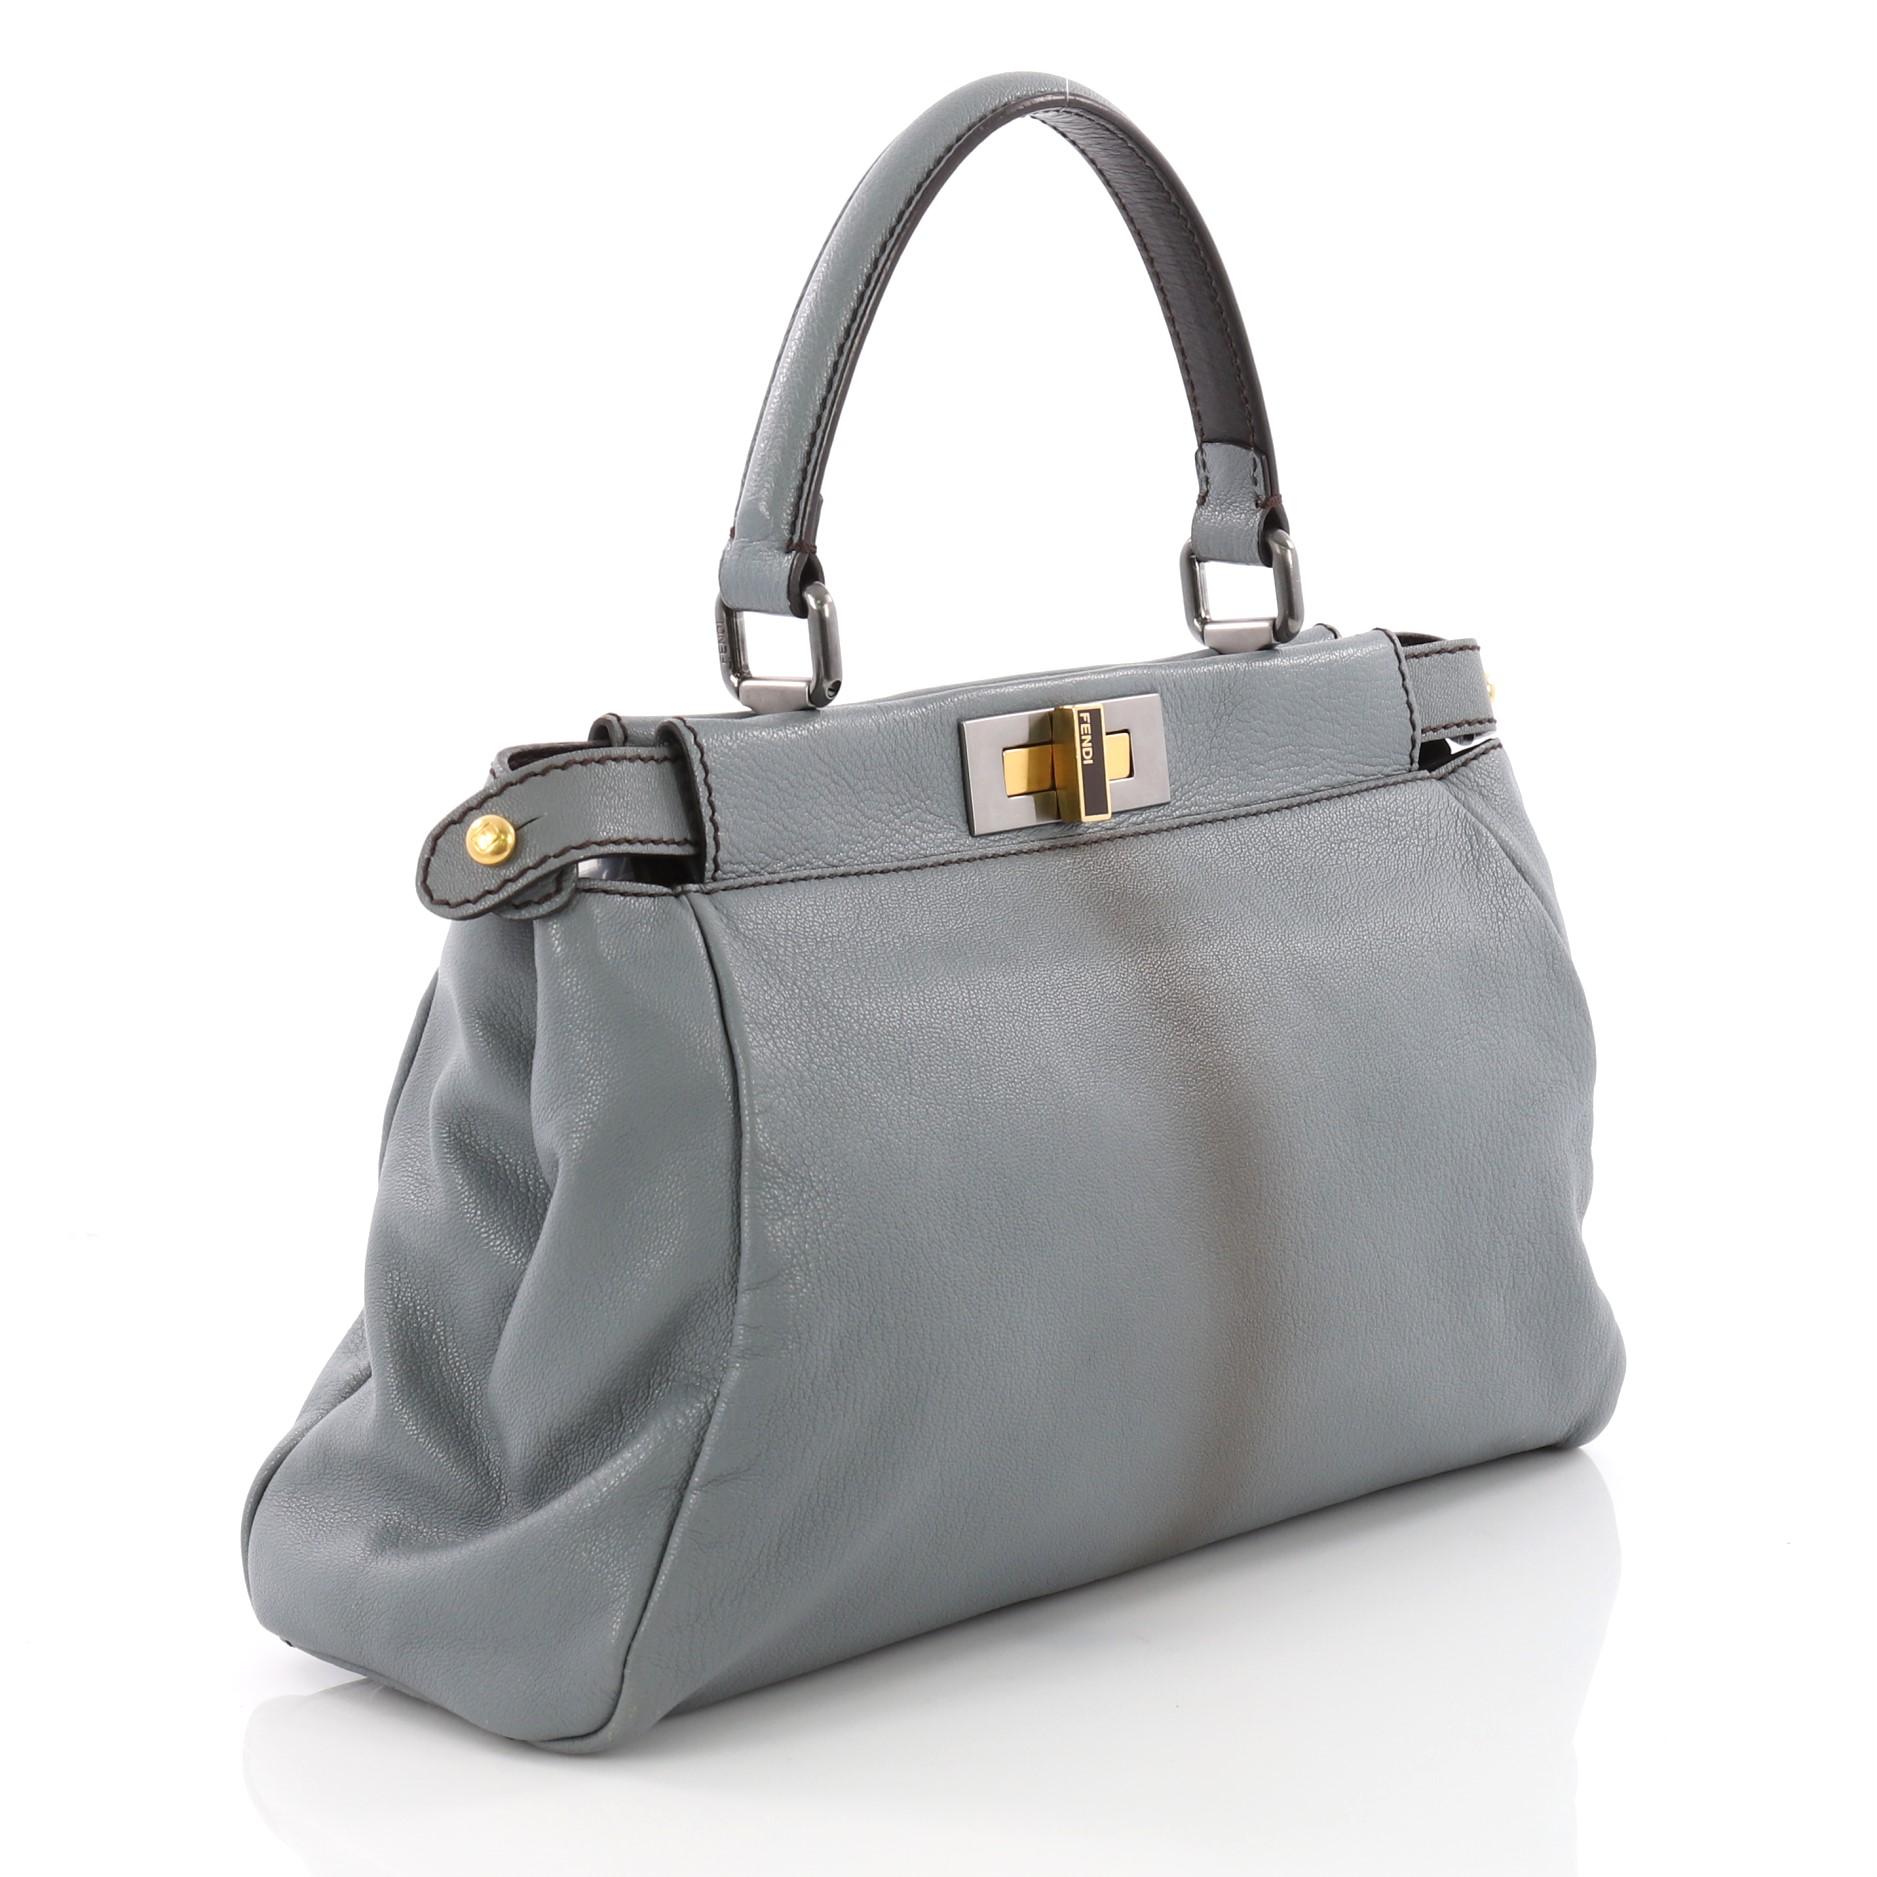 Gray Fendi Peekaboo Handbag Ombre Leather Regular